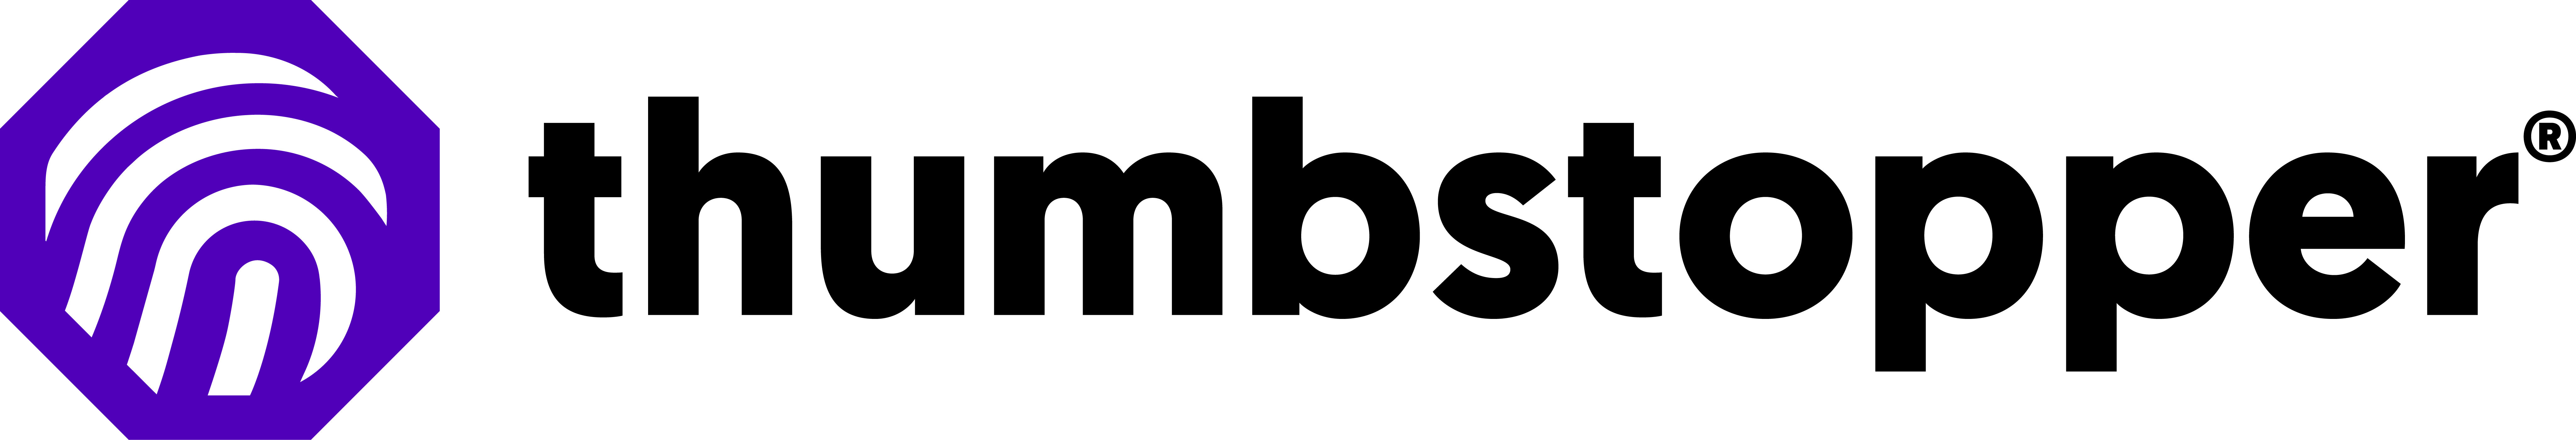 Thumbstopper_Company Logo